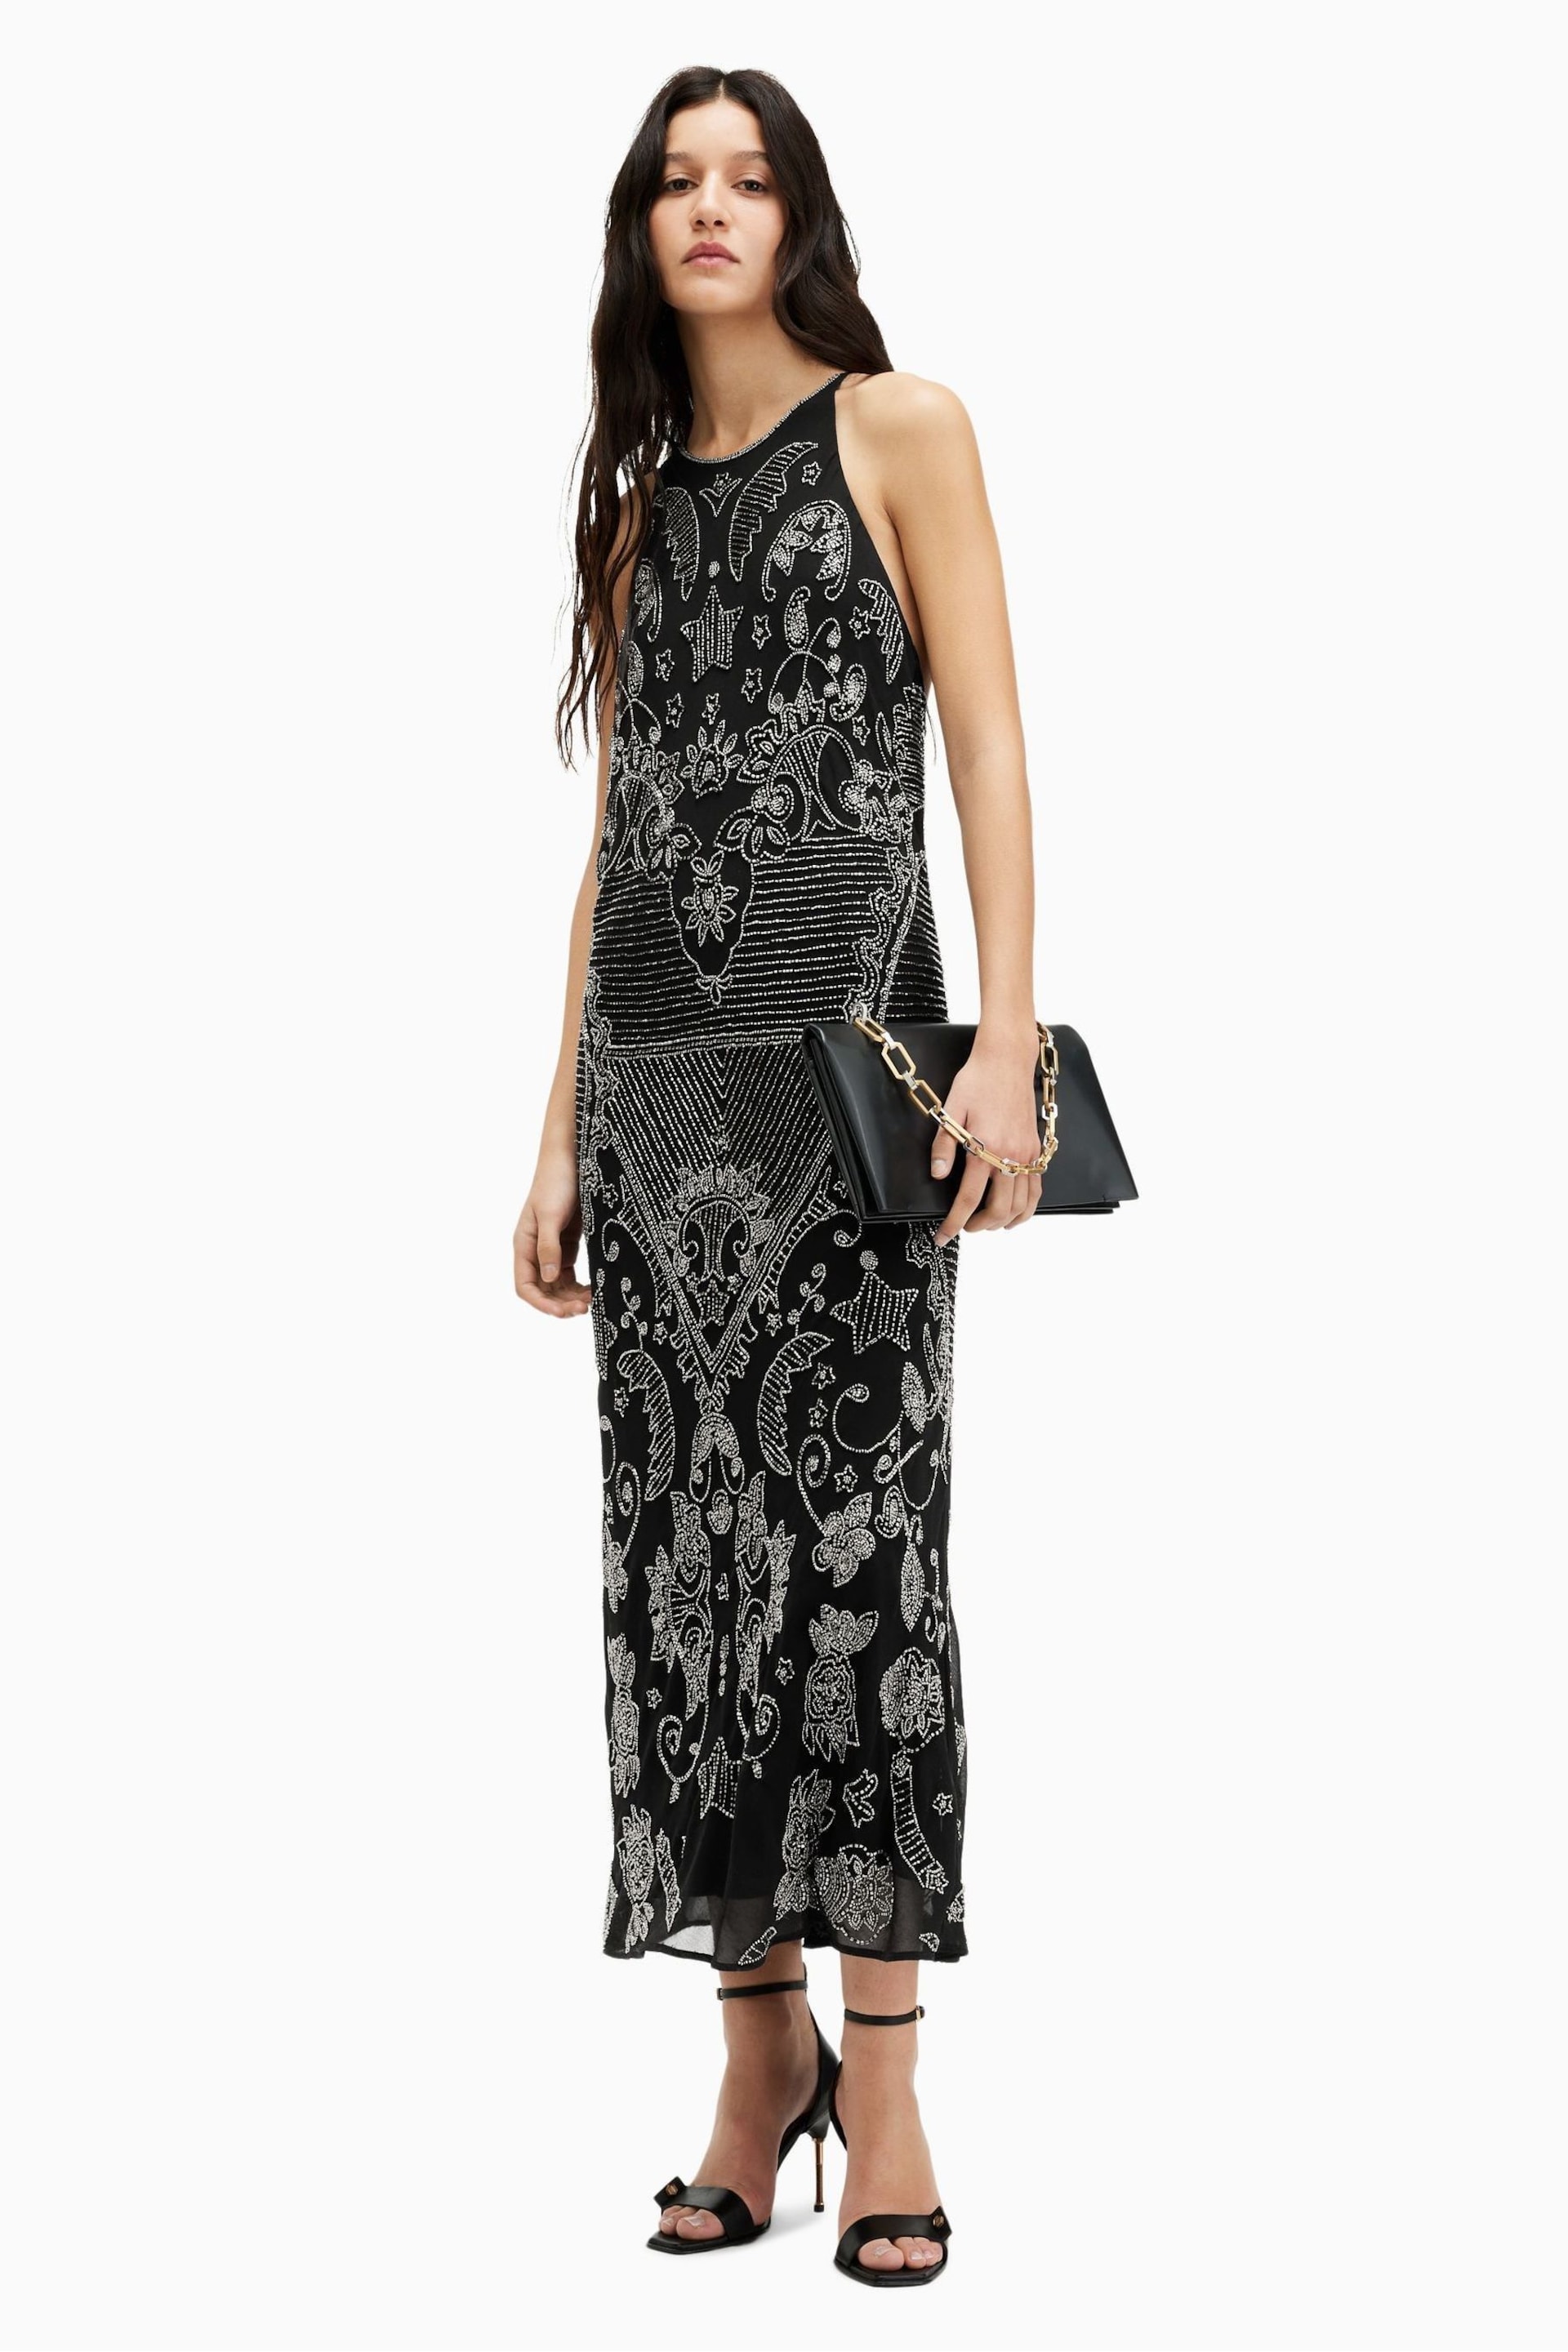 AllSaints Black Coralie Emb Dress - Image 1 of 7